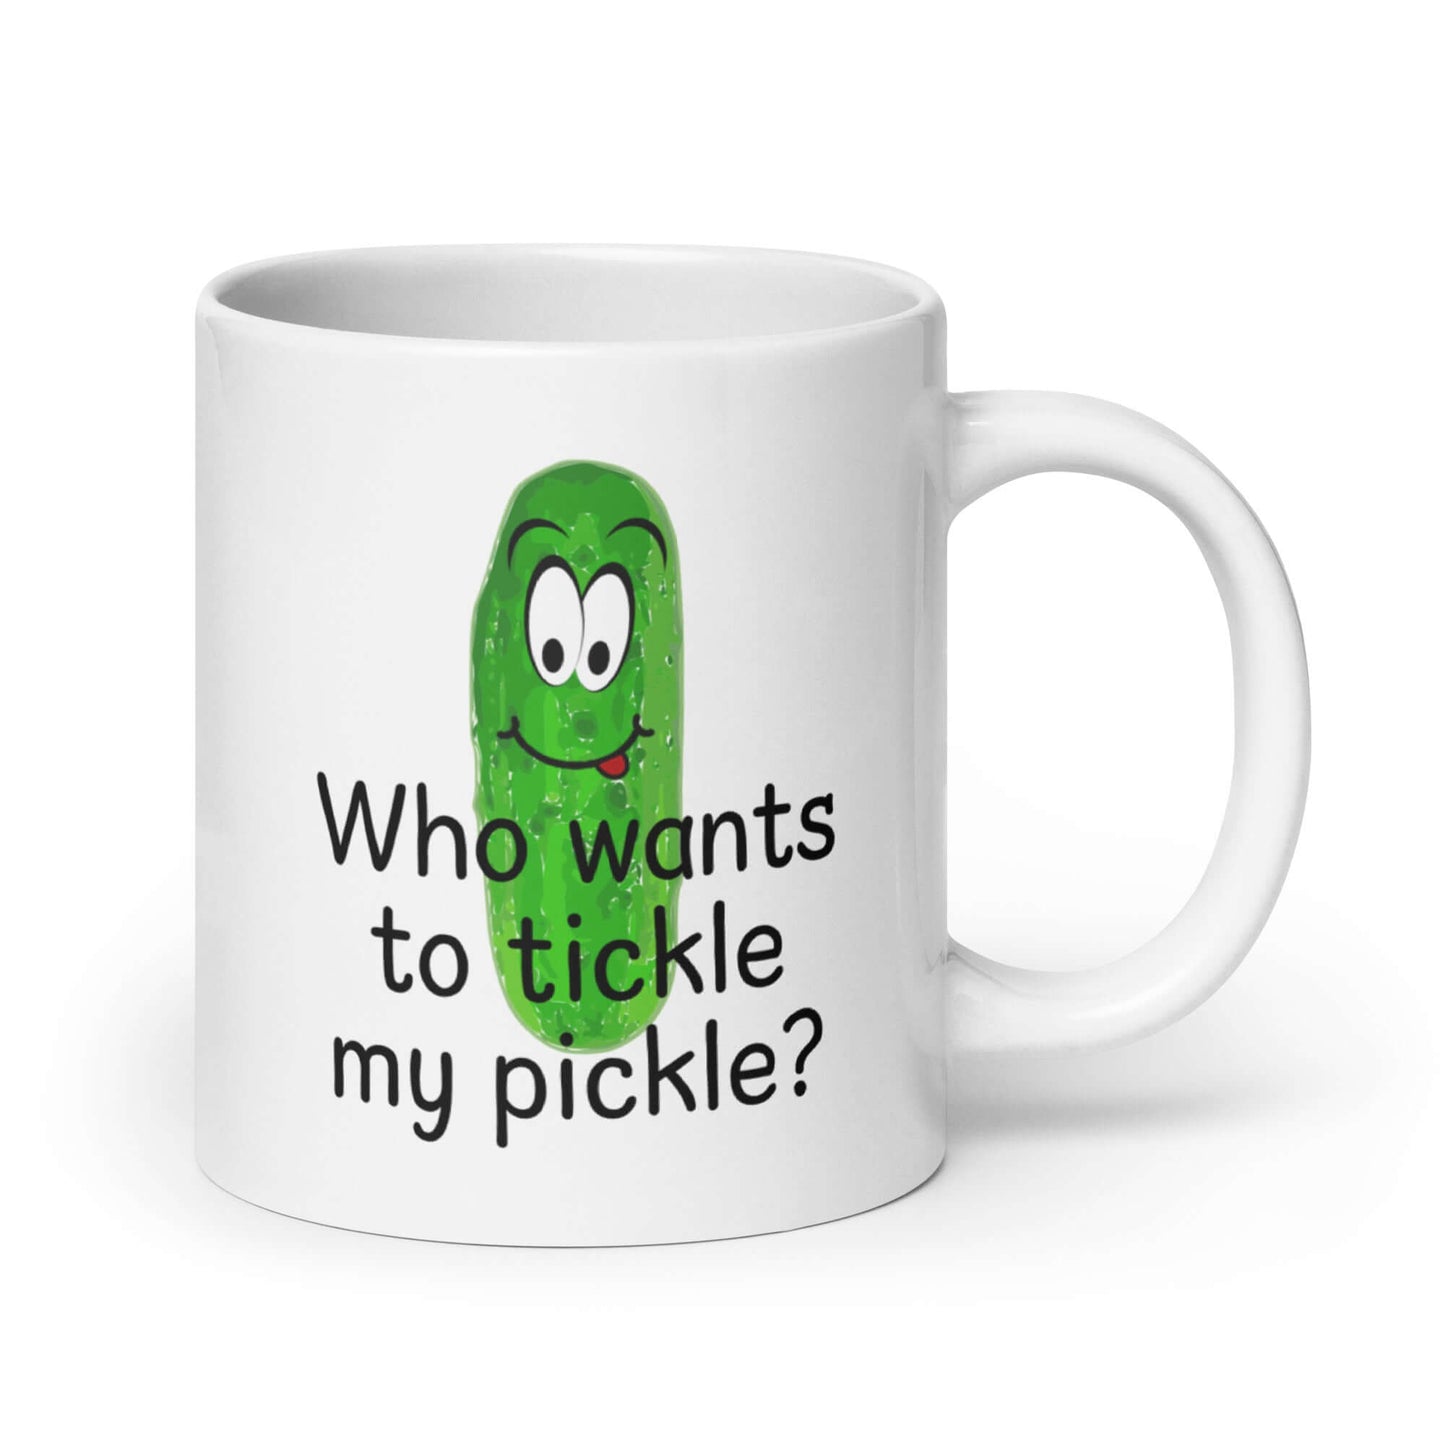 Who wants to tickle my pickle penis joke mug